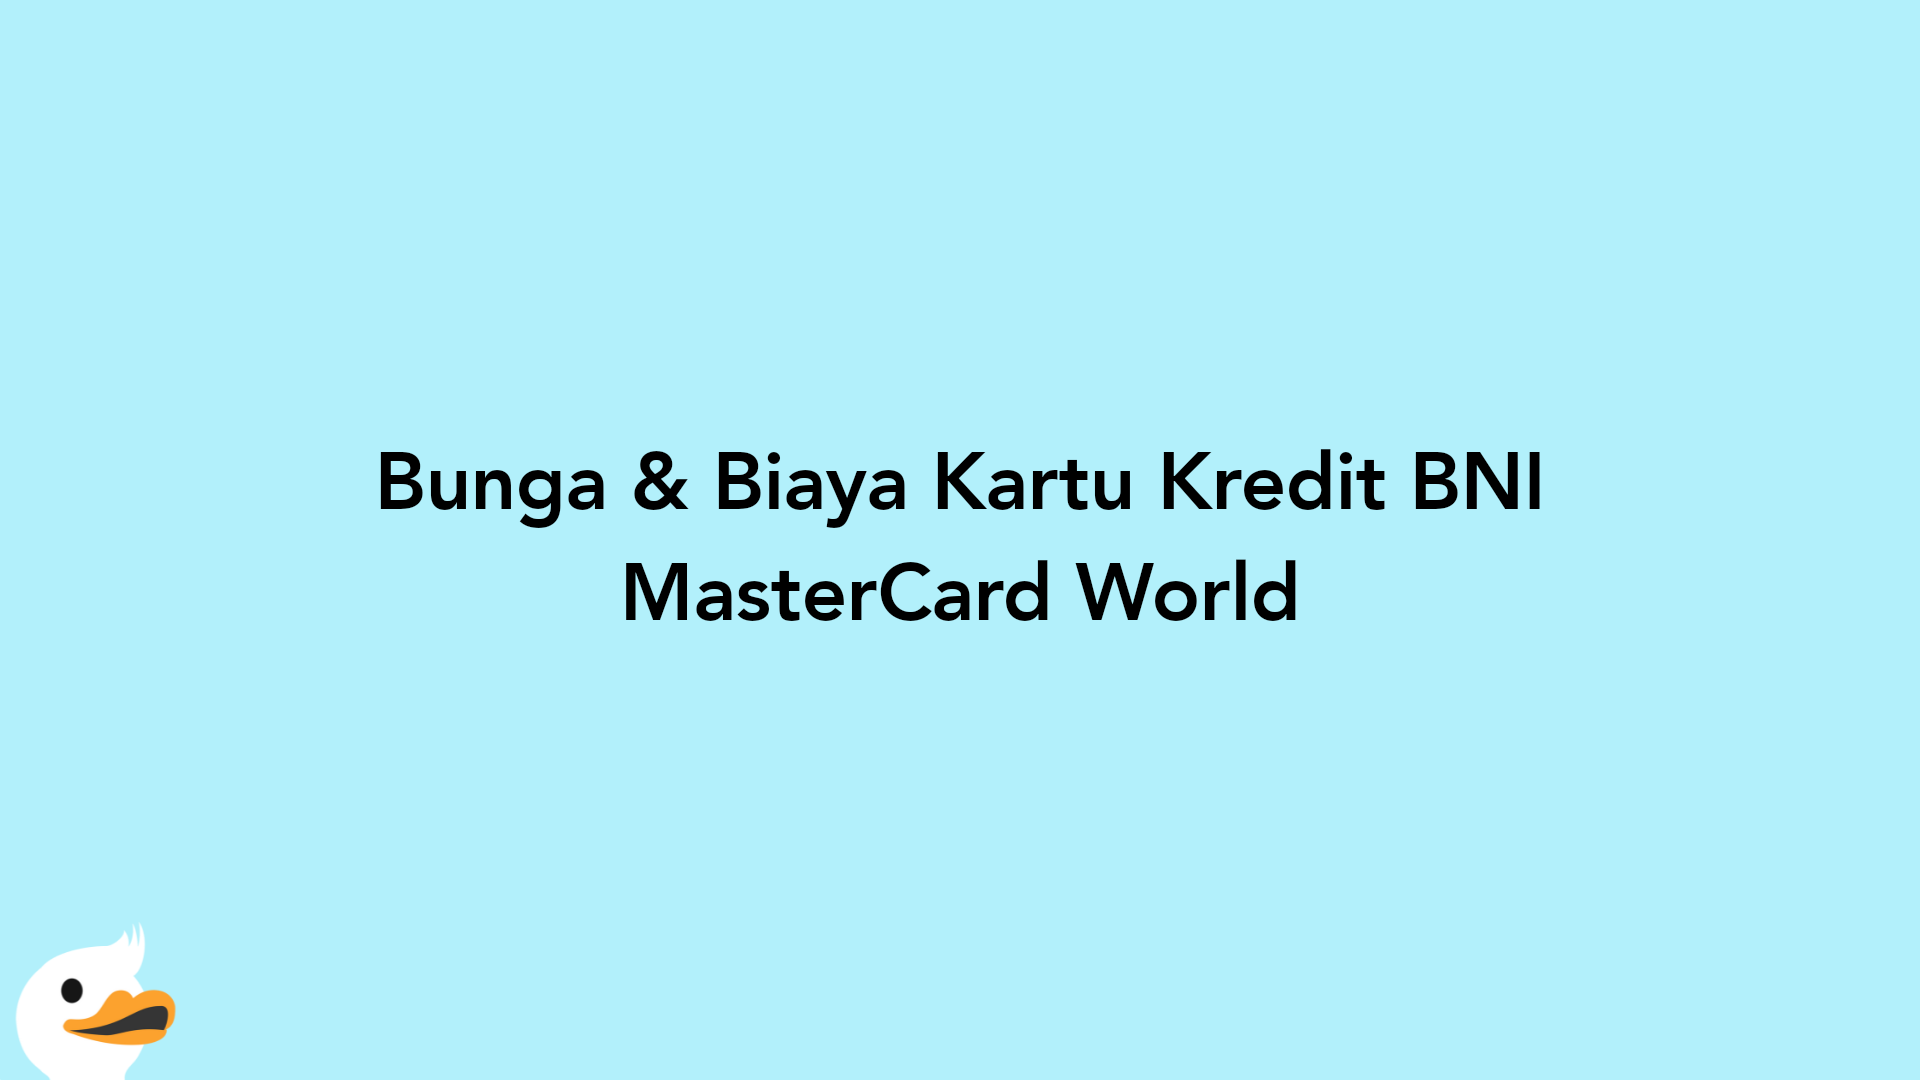 Bunga & Biaya Kartu Kredit BNI MasterCard World